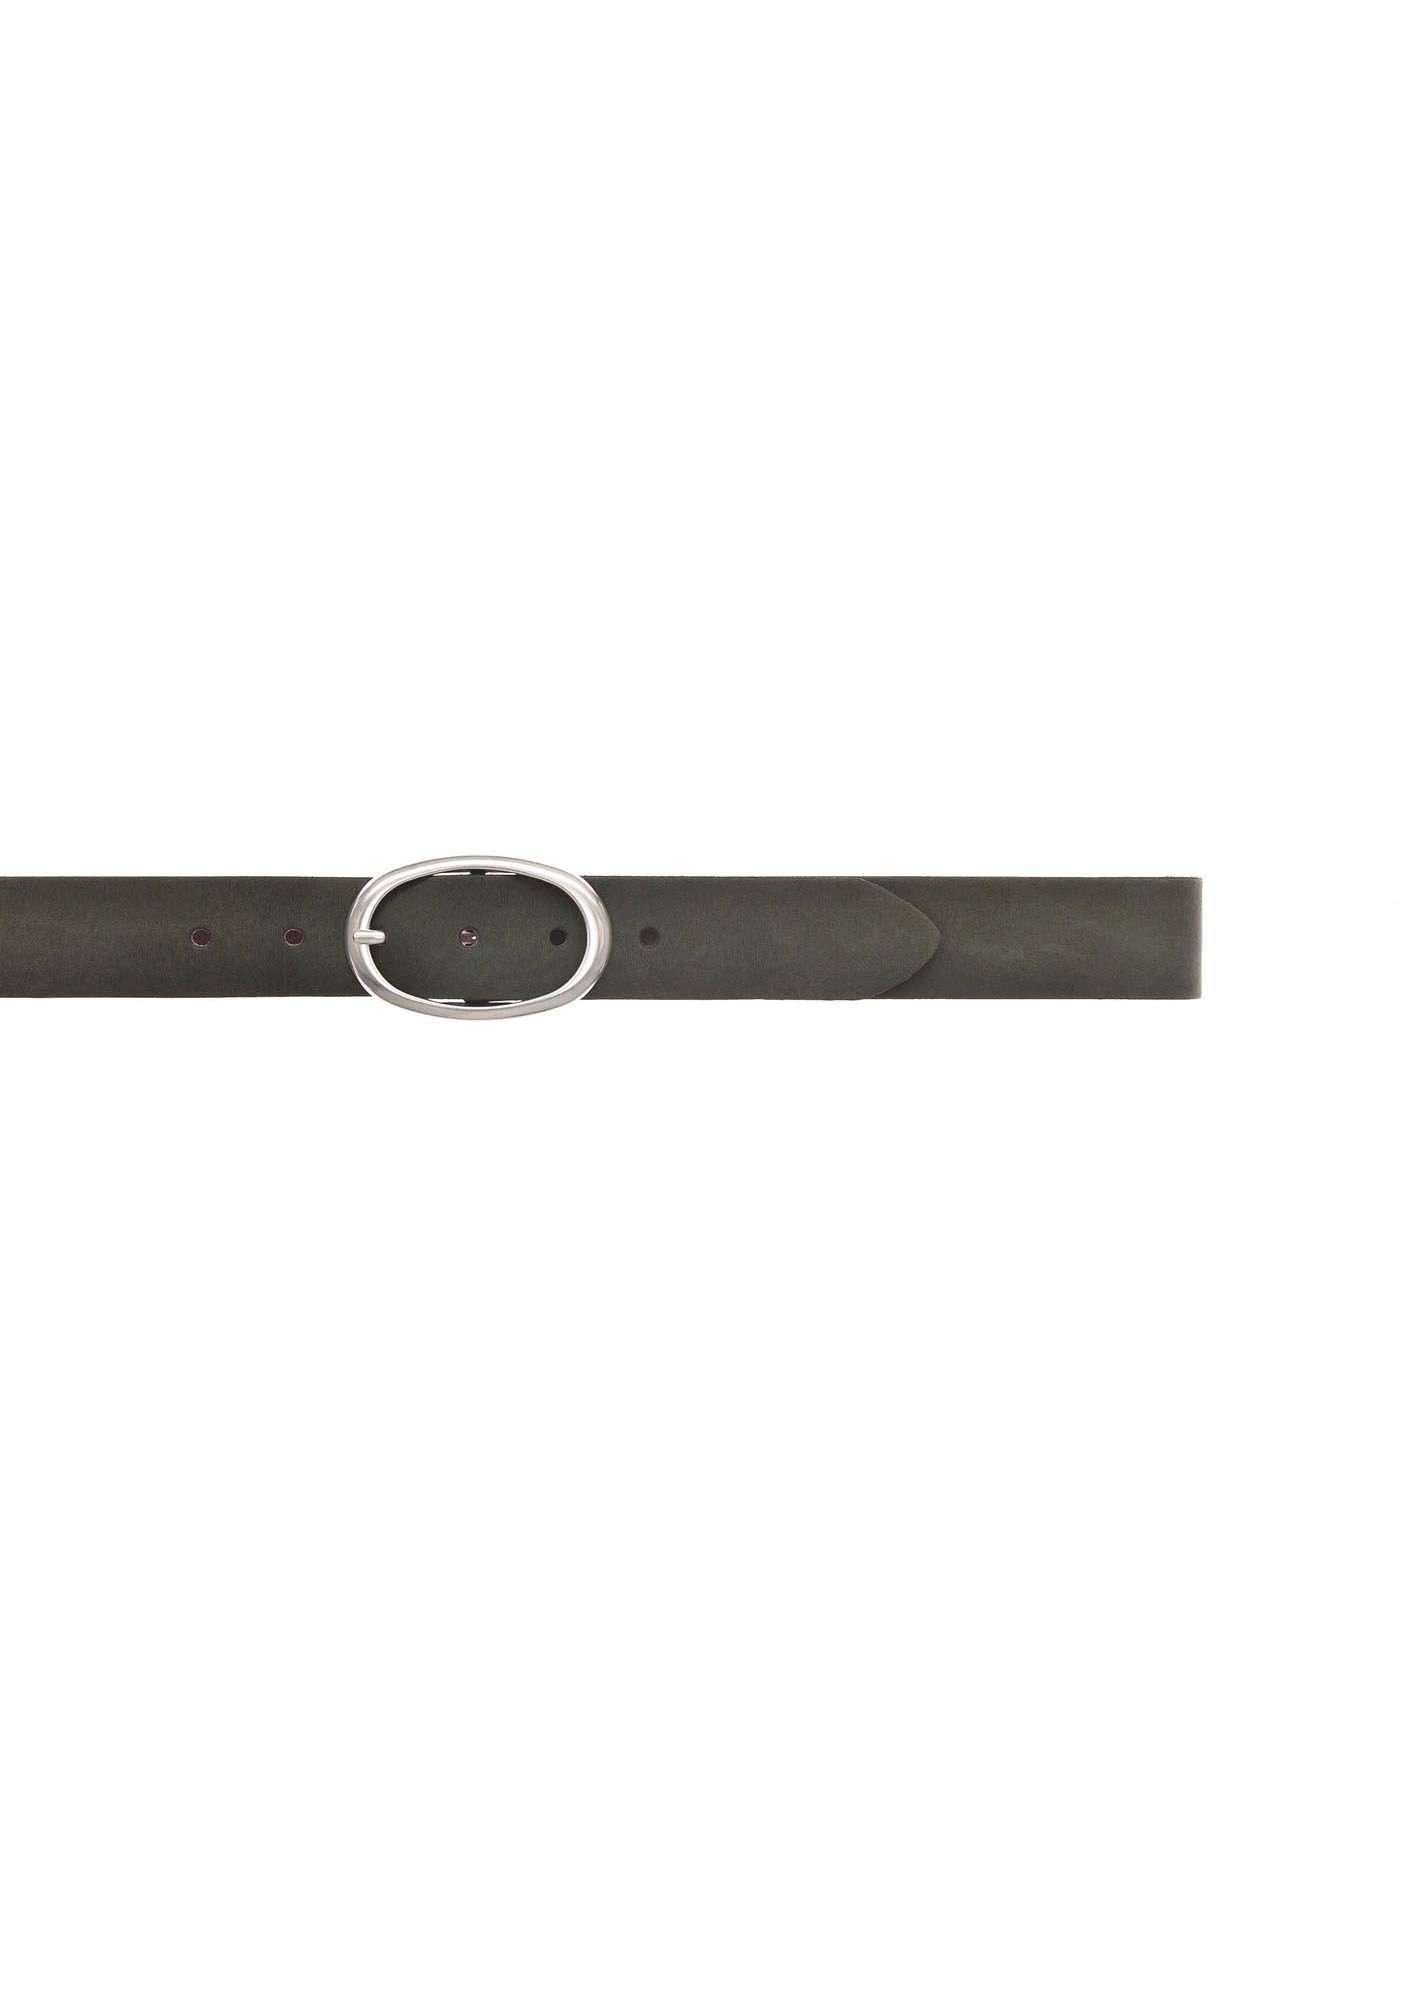 Vanzetti Ledergürtel Ovale Doppelschließe in dunkelgrün Silber mattem